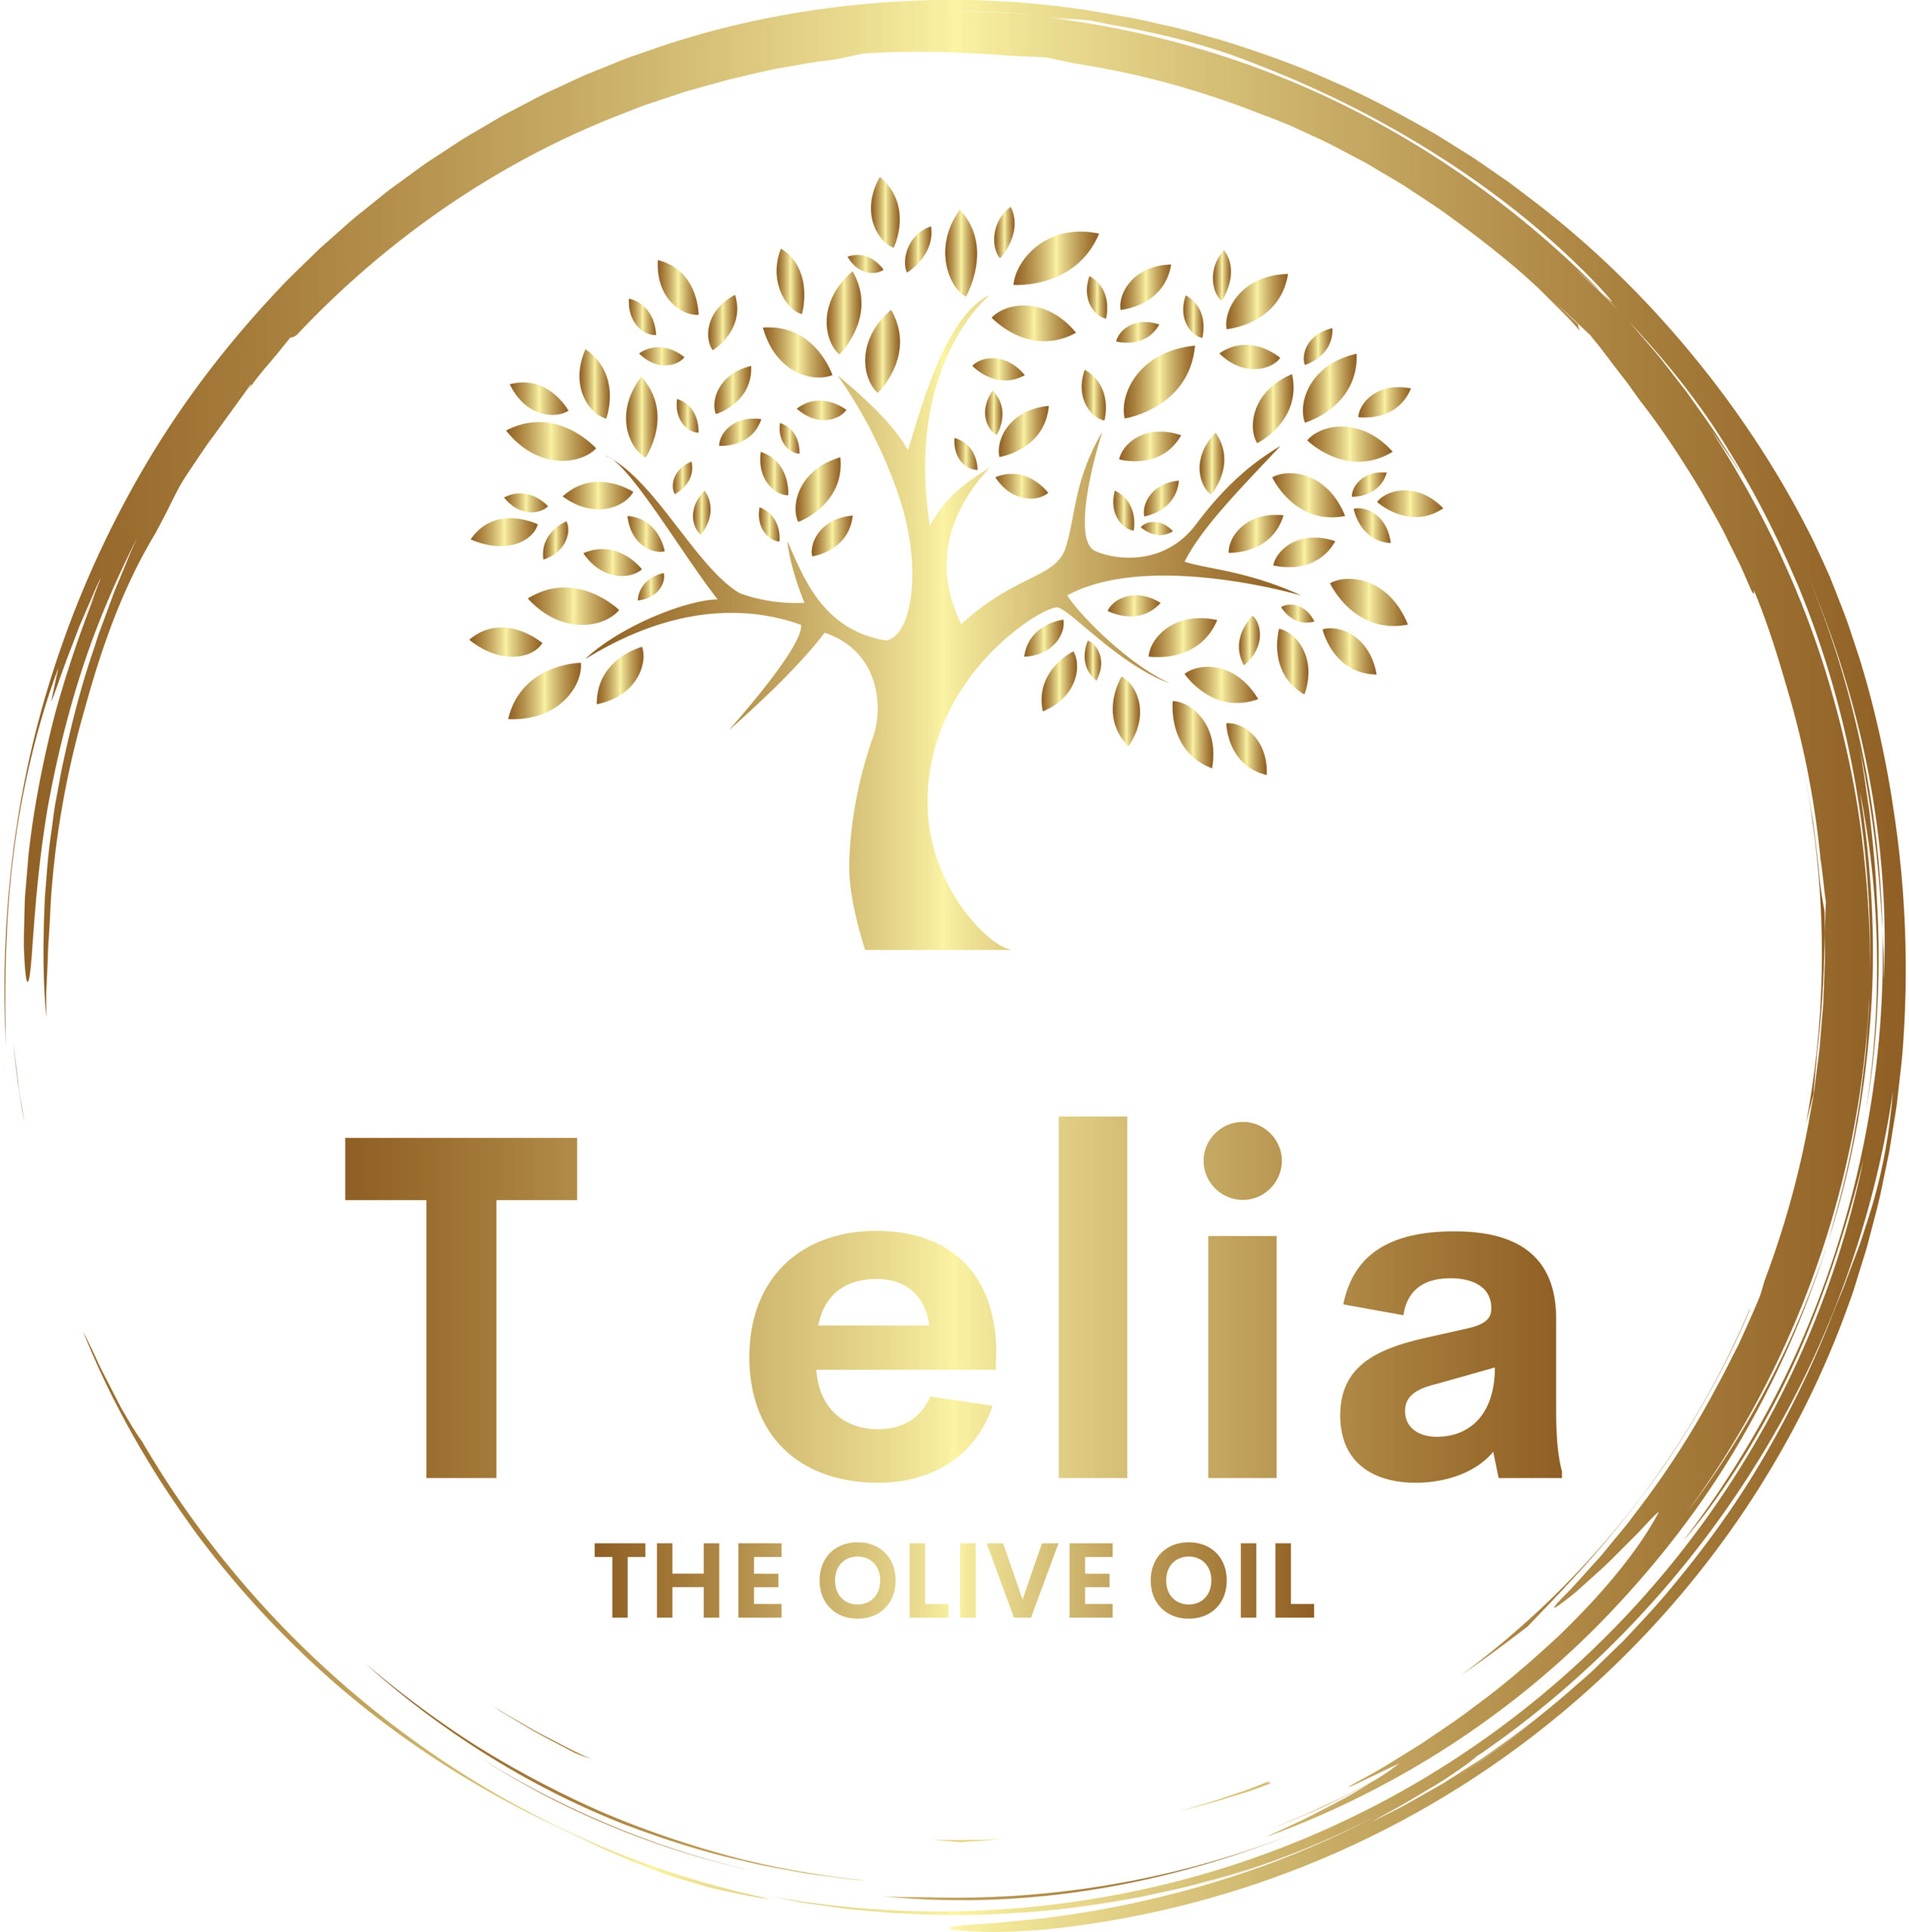 TELIA OLIVE OIL